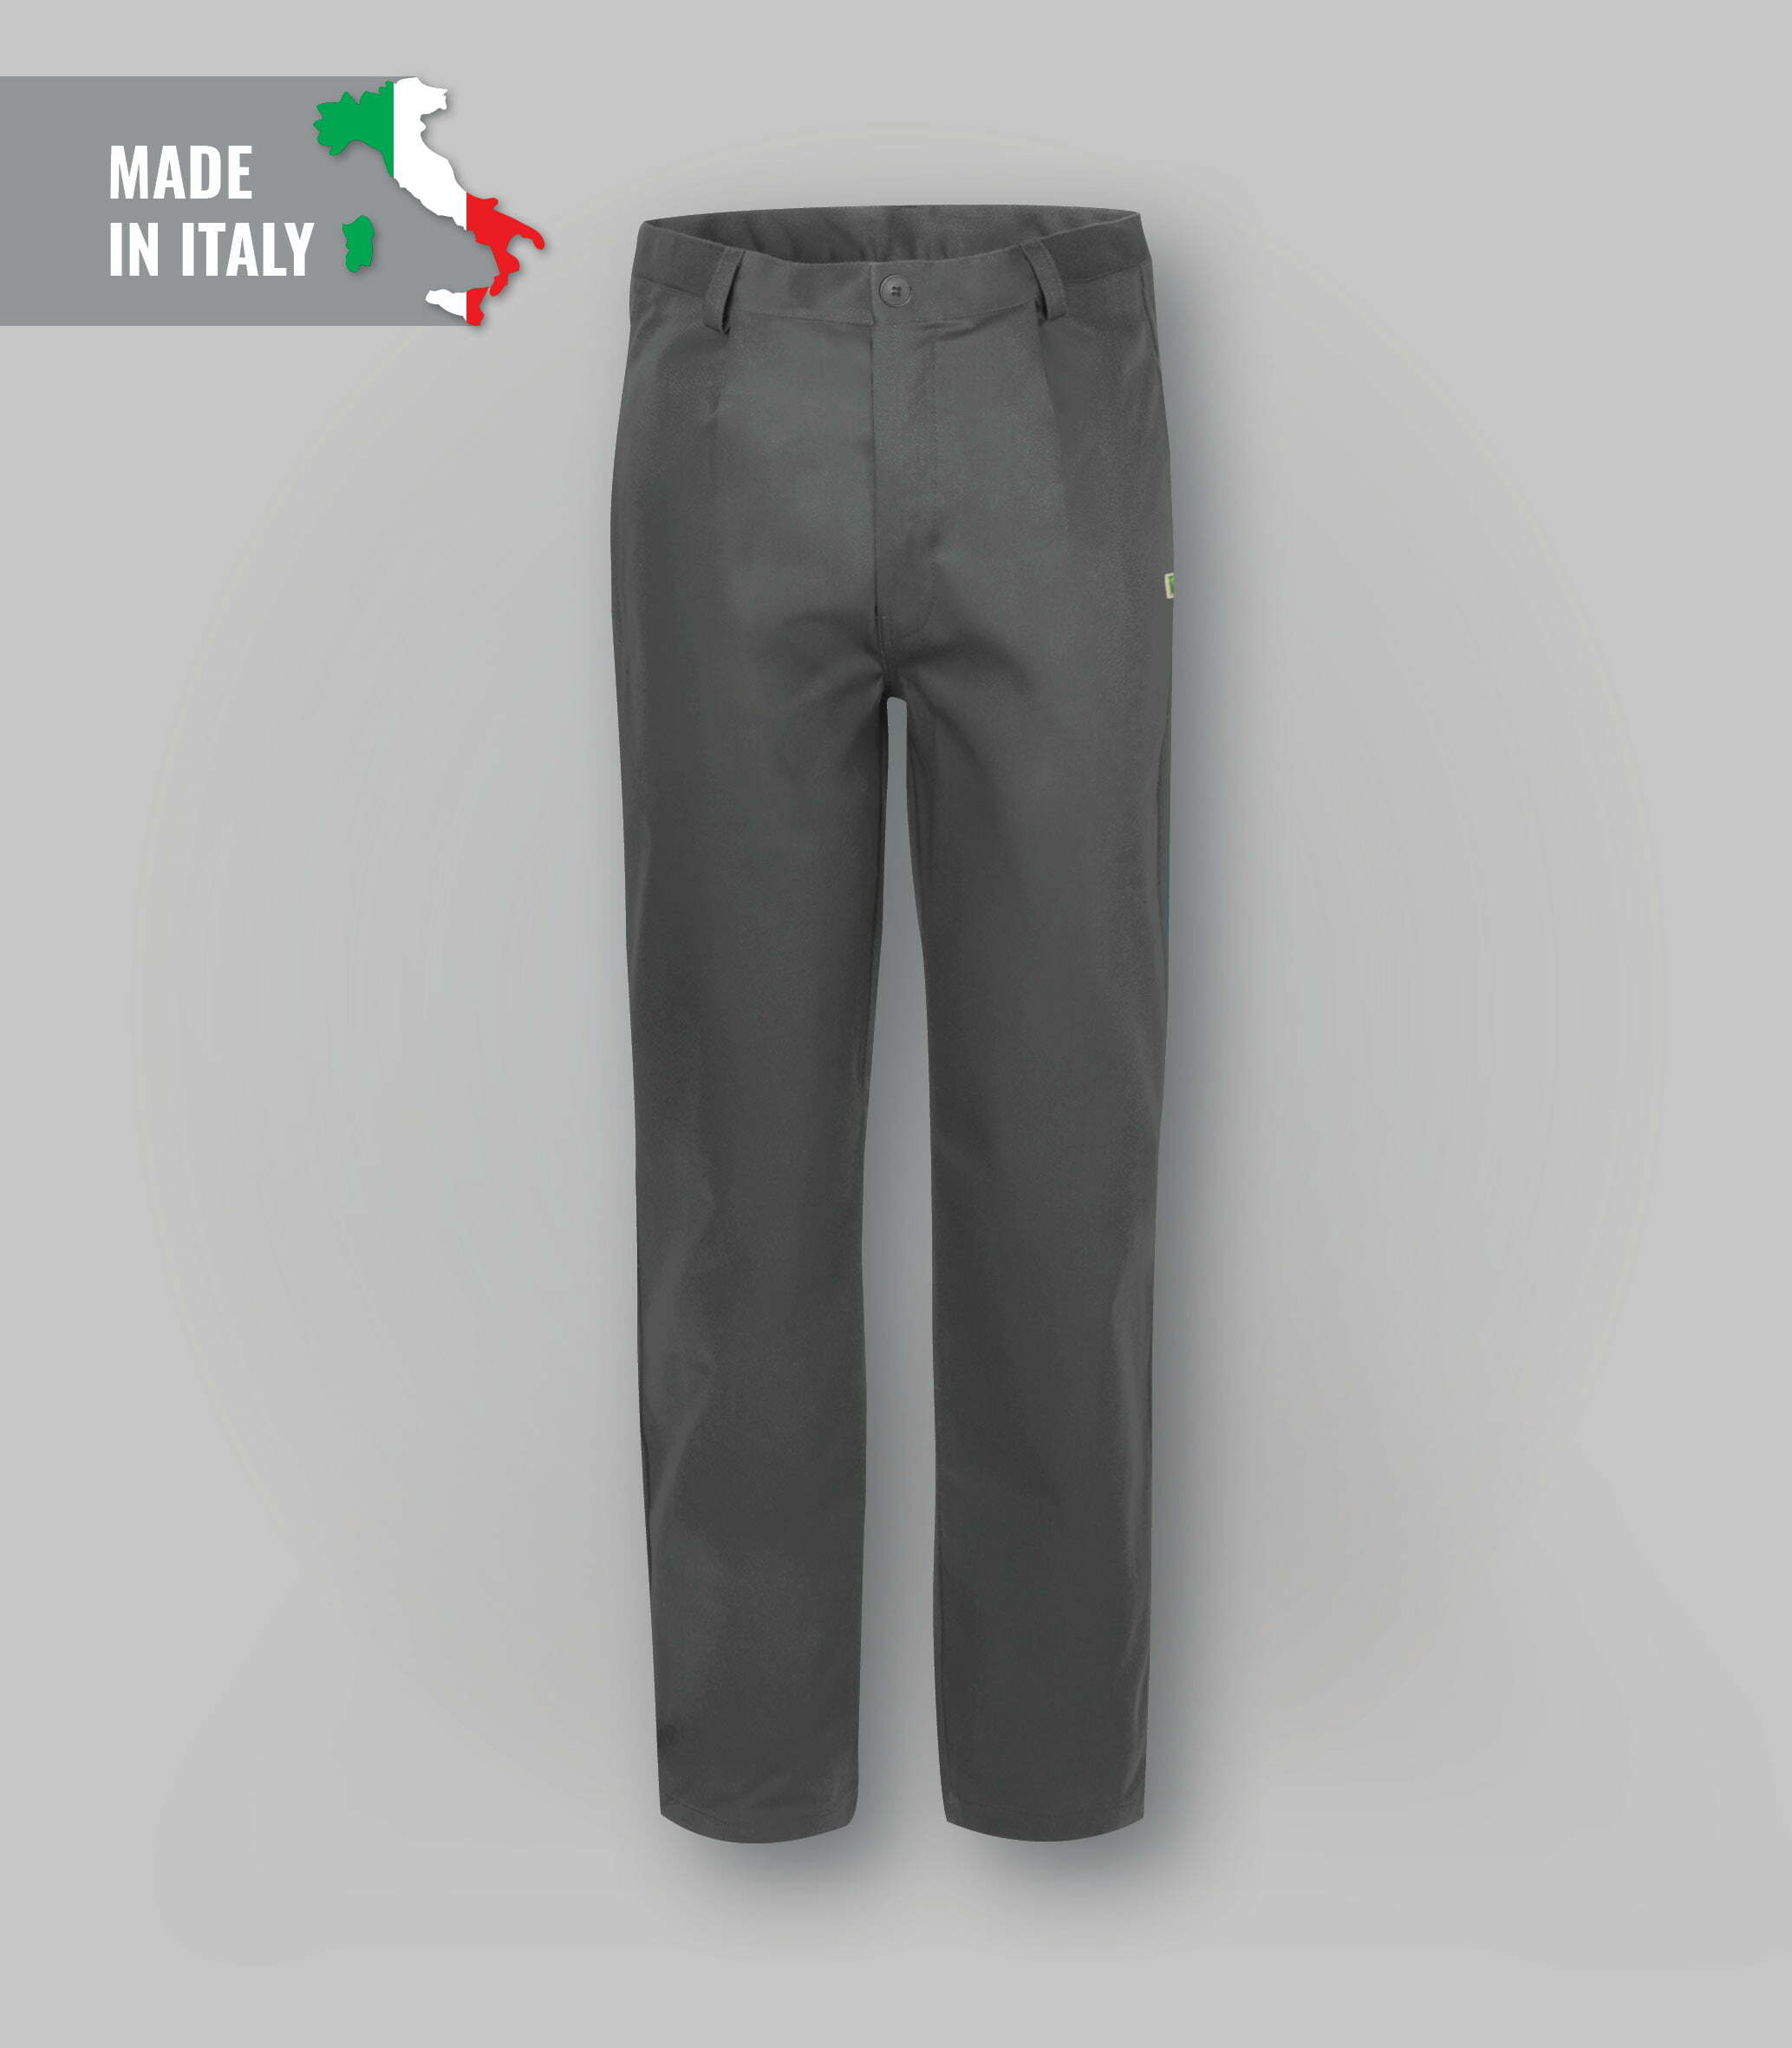 Arc Flash FR welding antiacid antistatic trousers-abbigliamentocertificato.com